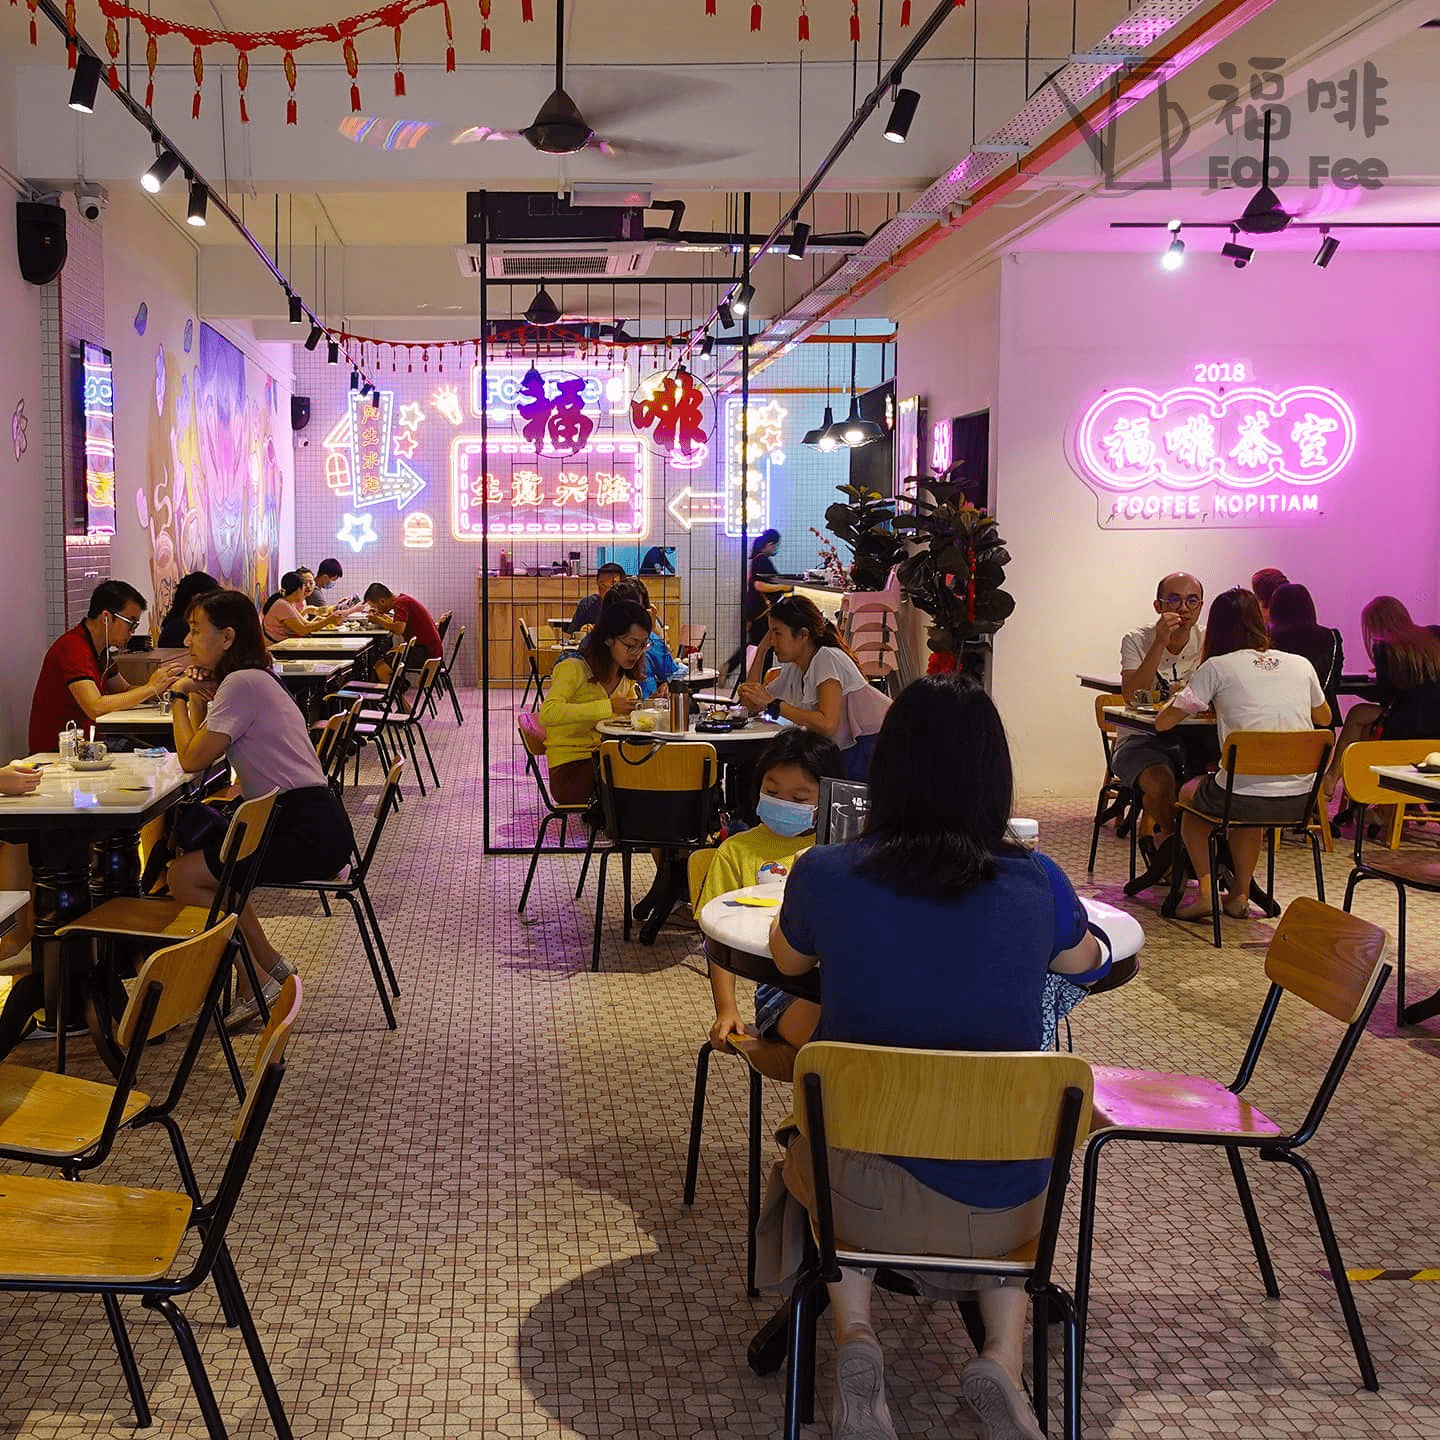 Kepong Cafes - Foo Fee dining